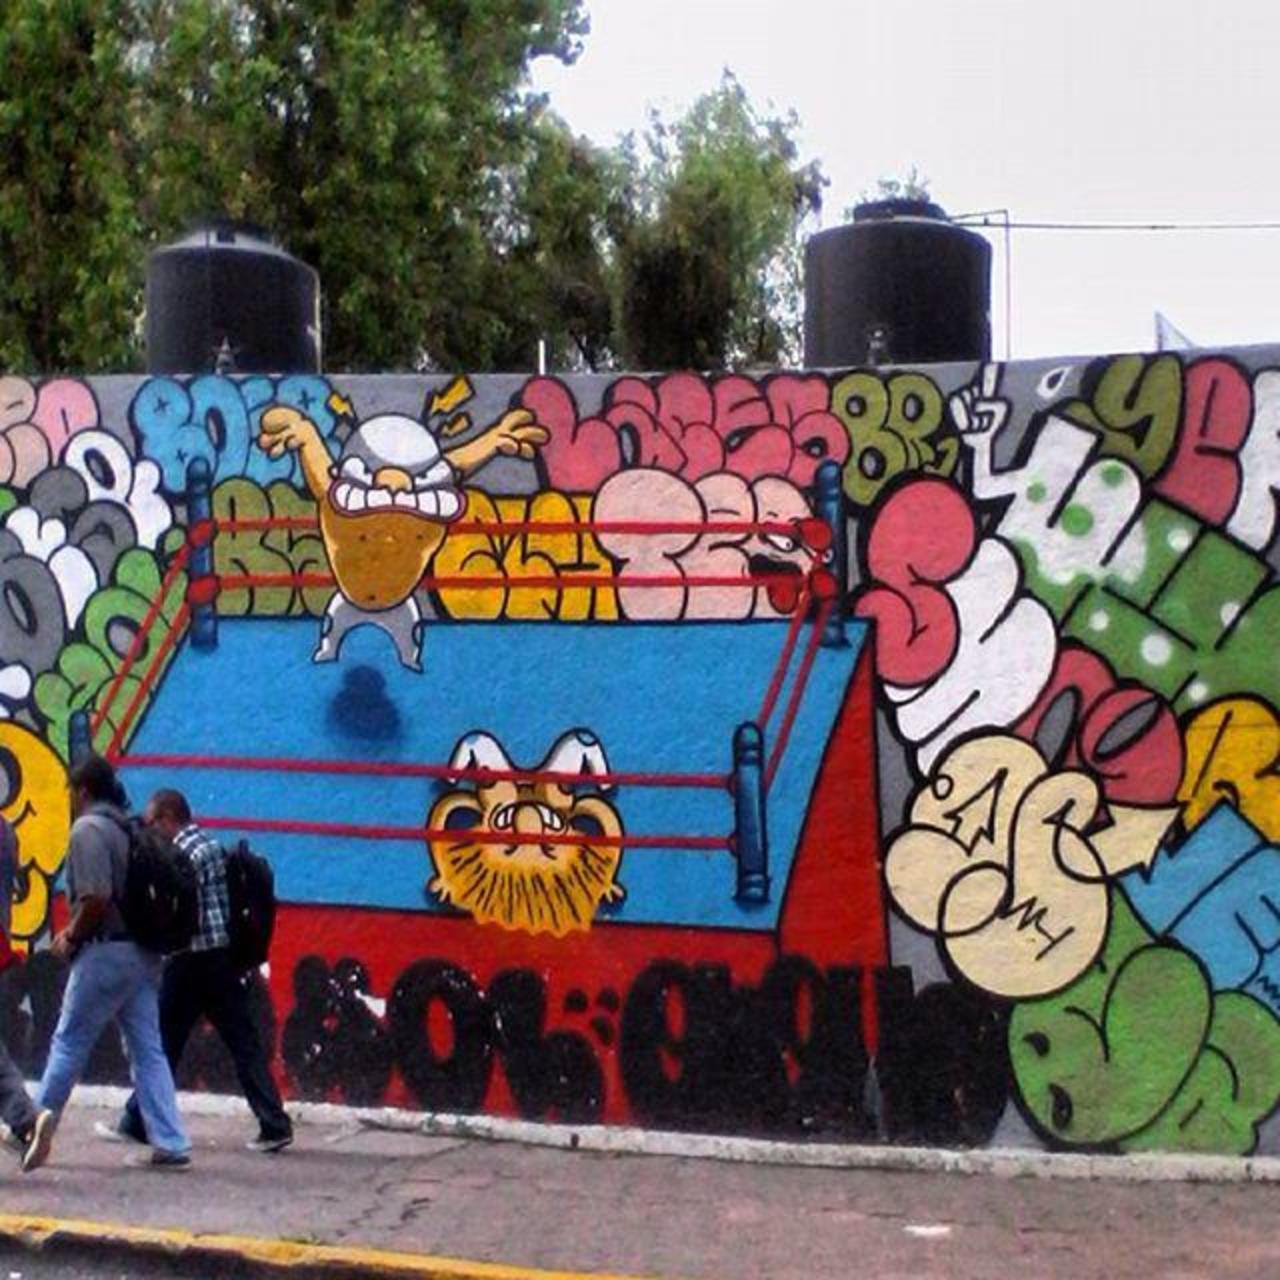 #Mexico #MexicoCity #StreetArt #Graffiti #StreetArtMexico #Urban #Art #Mural #Architecture #Wall #Mexican #Wrestlin… http://t.co/4TfCQL743N